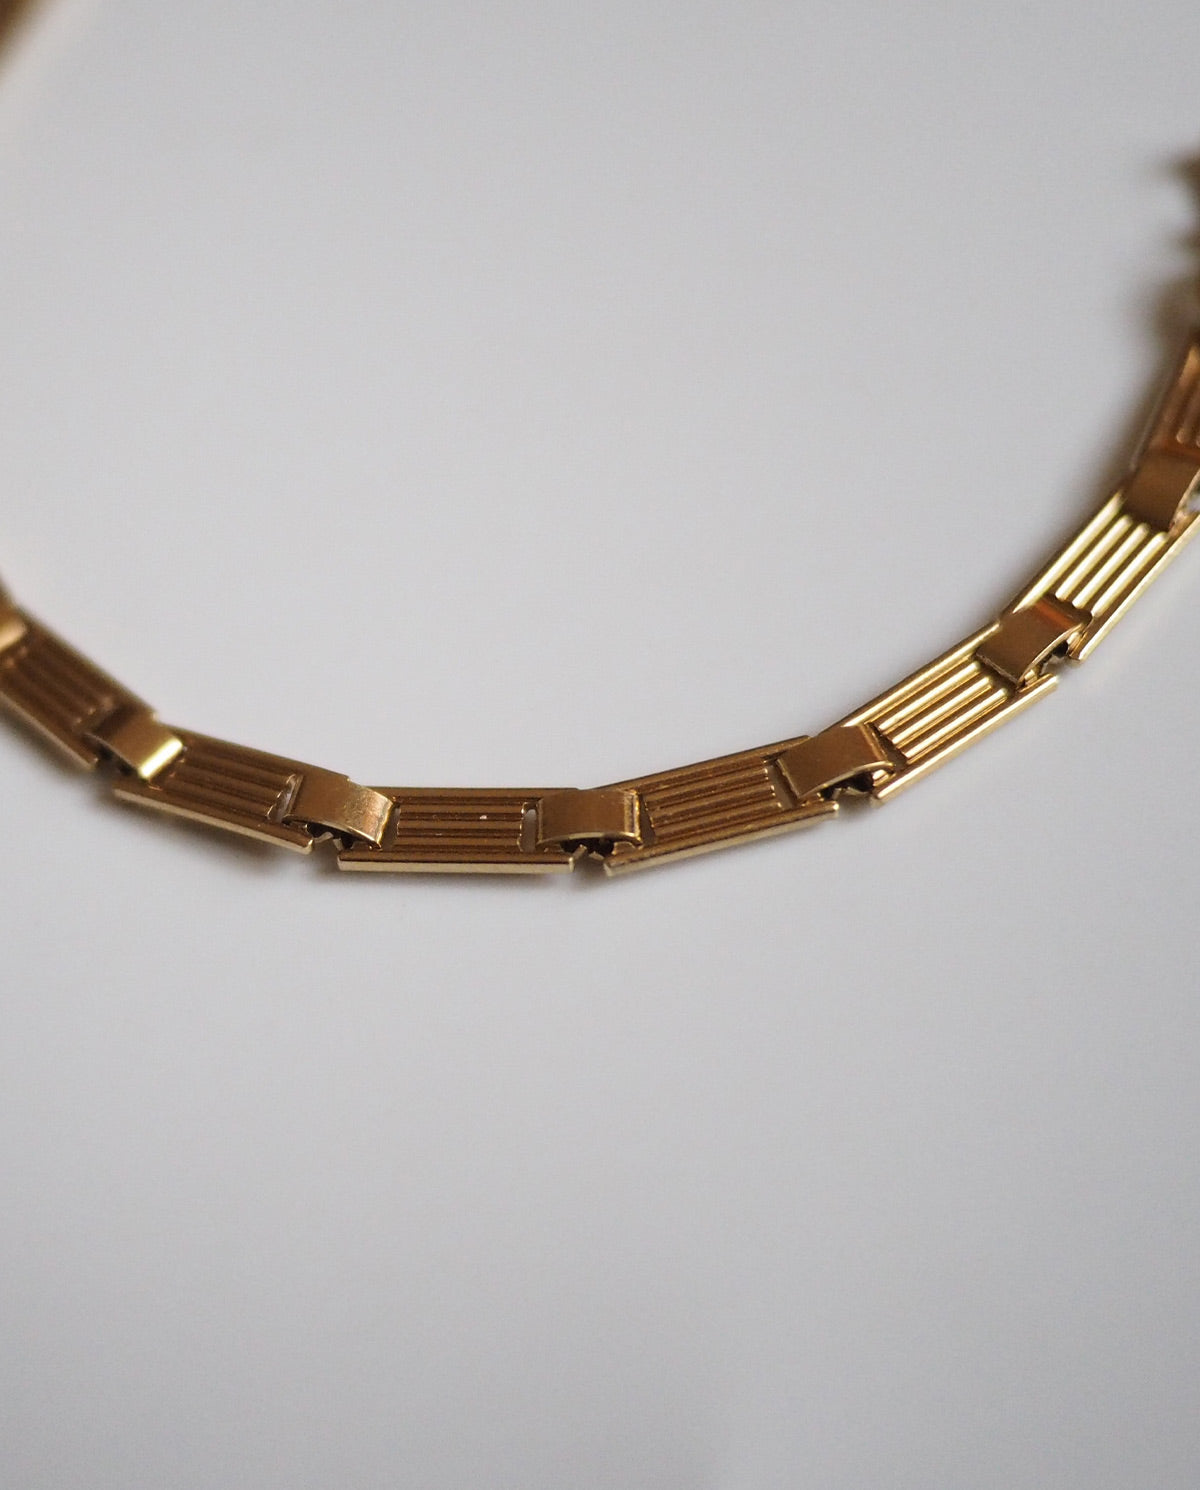 Gold Tone Minimalist Vintage Bracelet